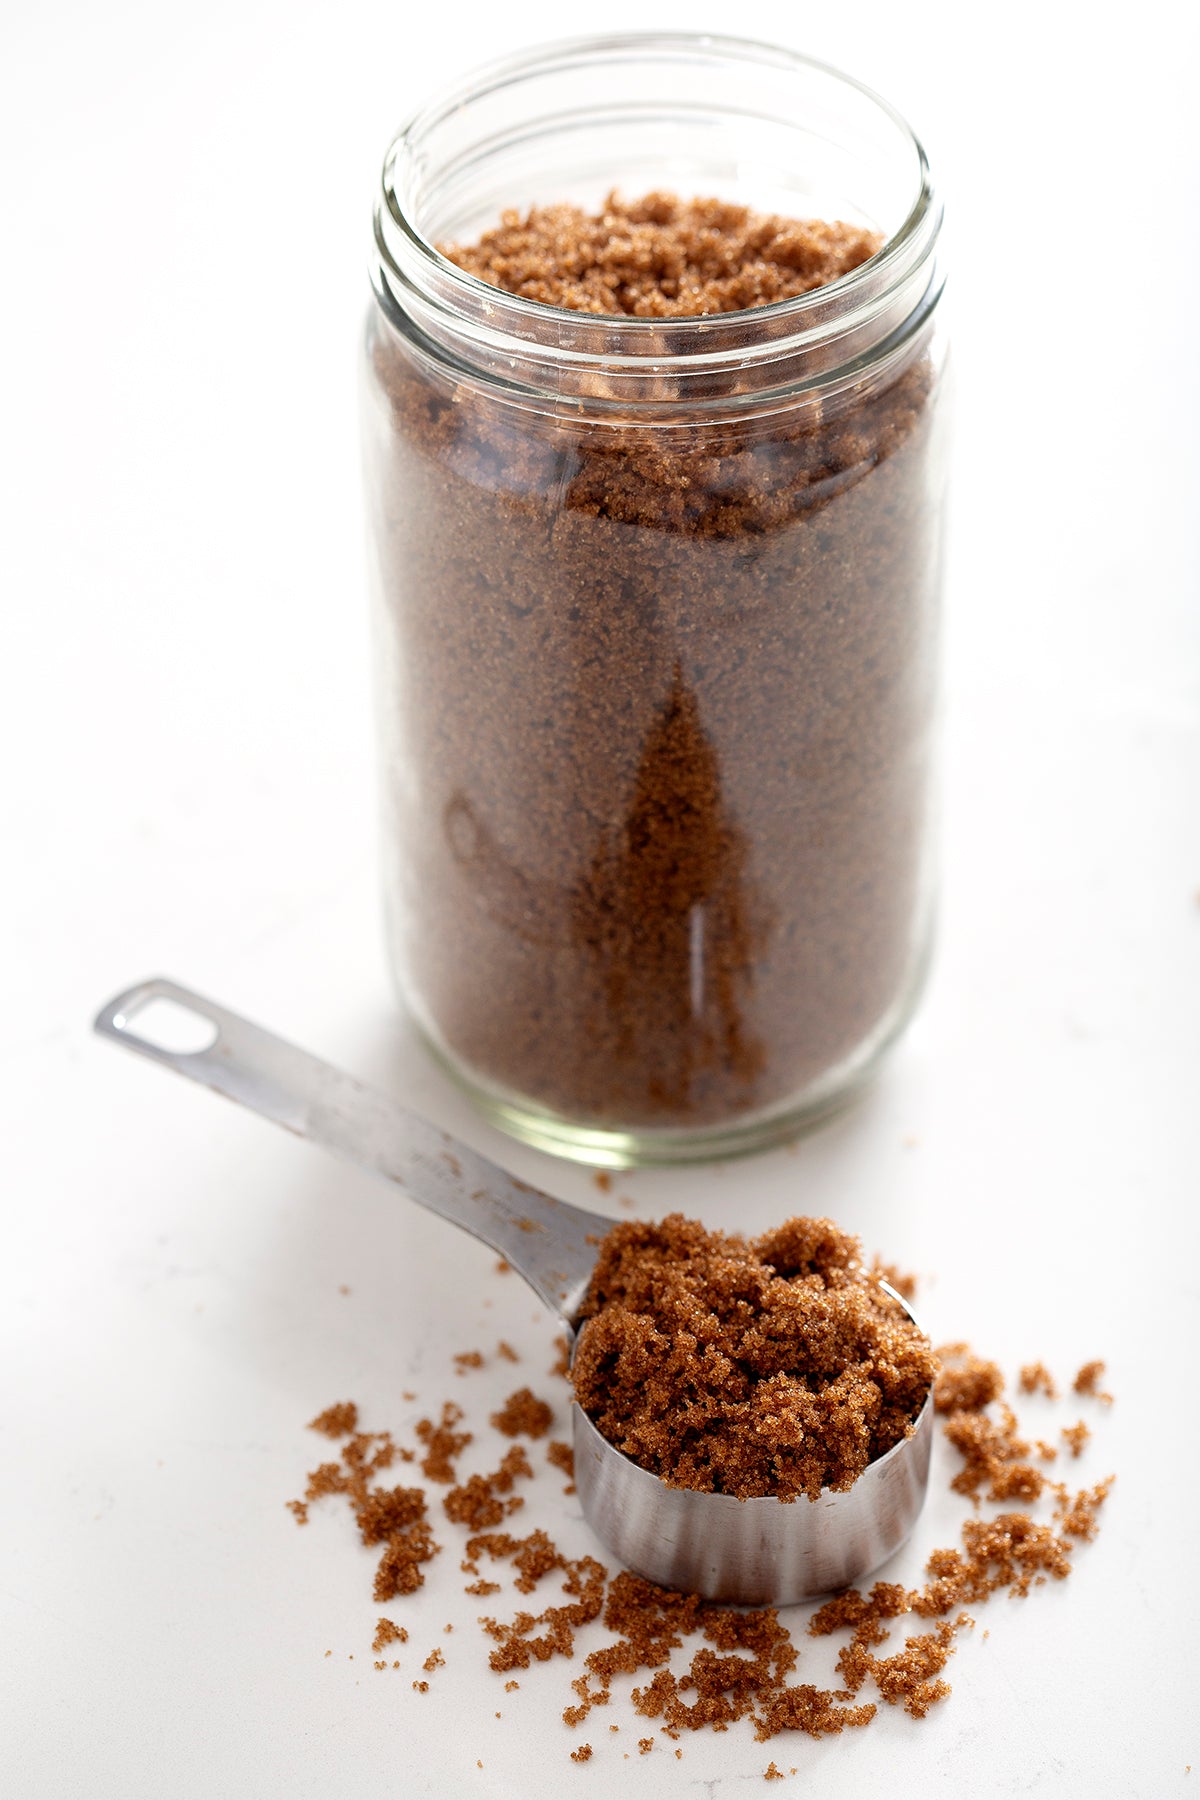 jar and measuring cup of brown sugar